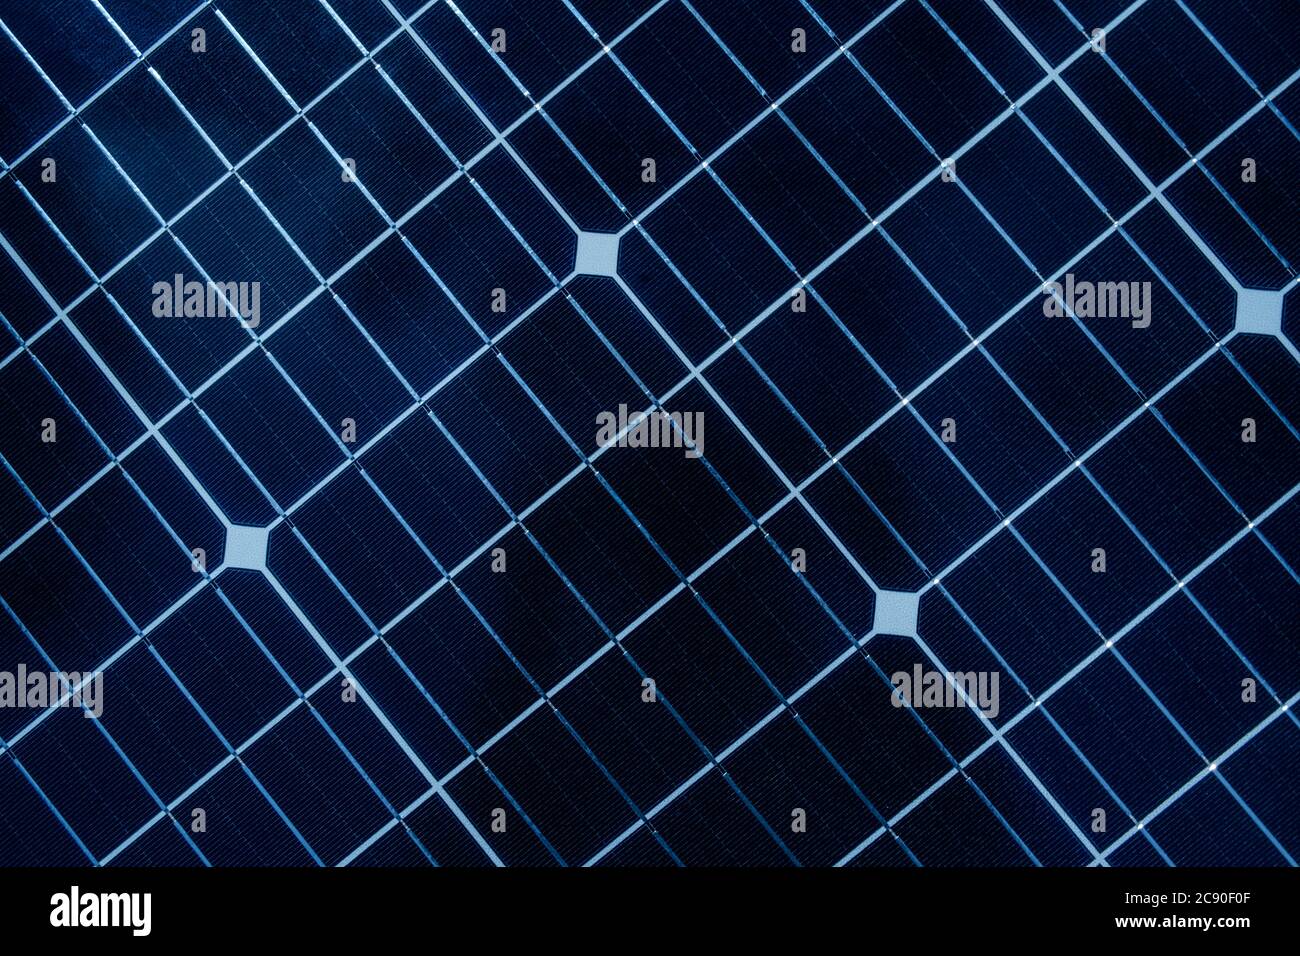 Close-up of solar panel Stock Photo